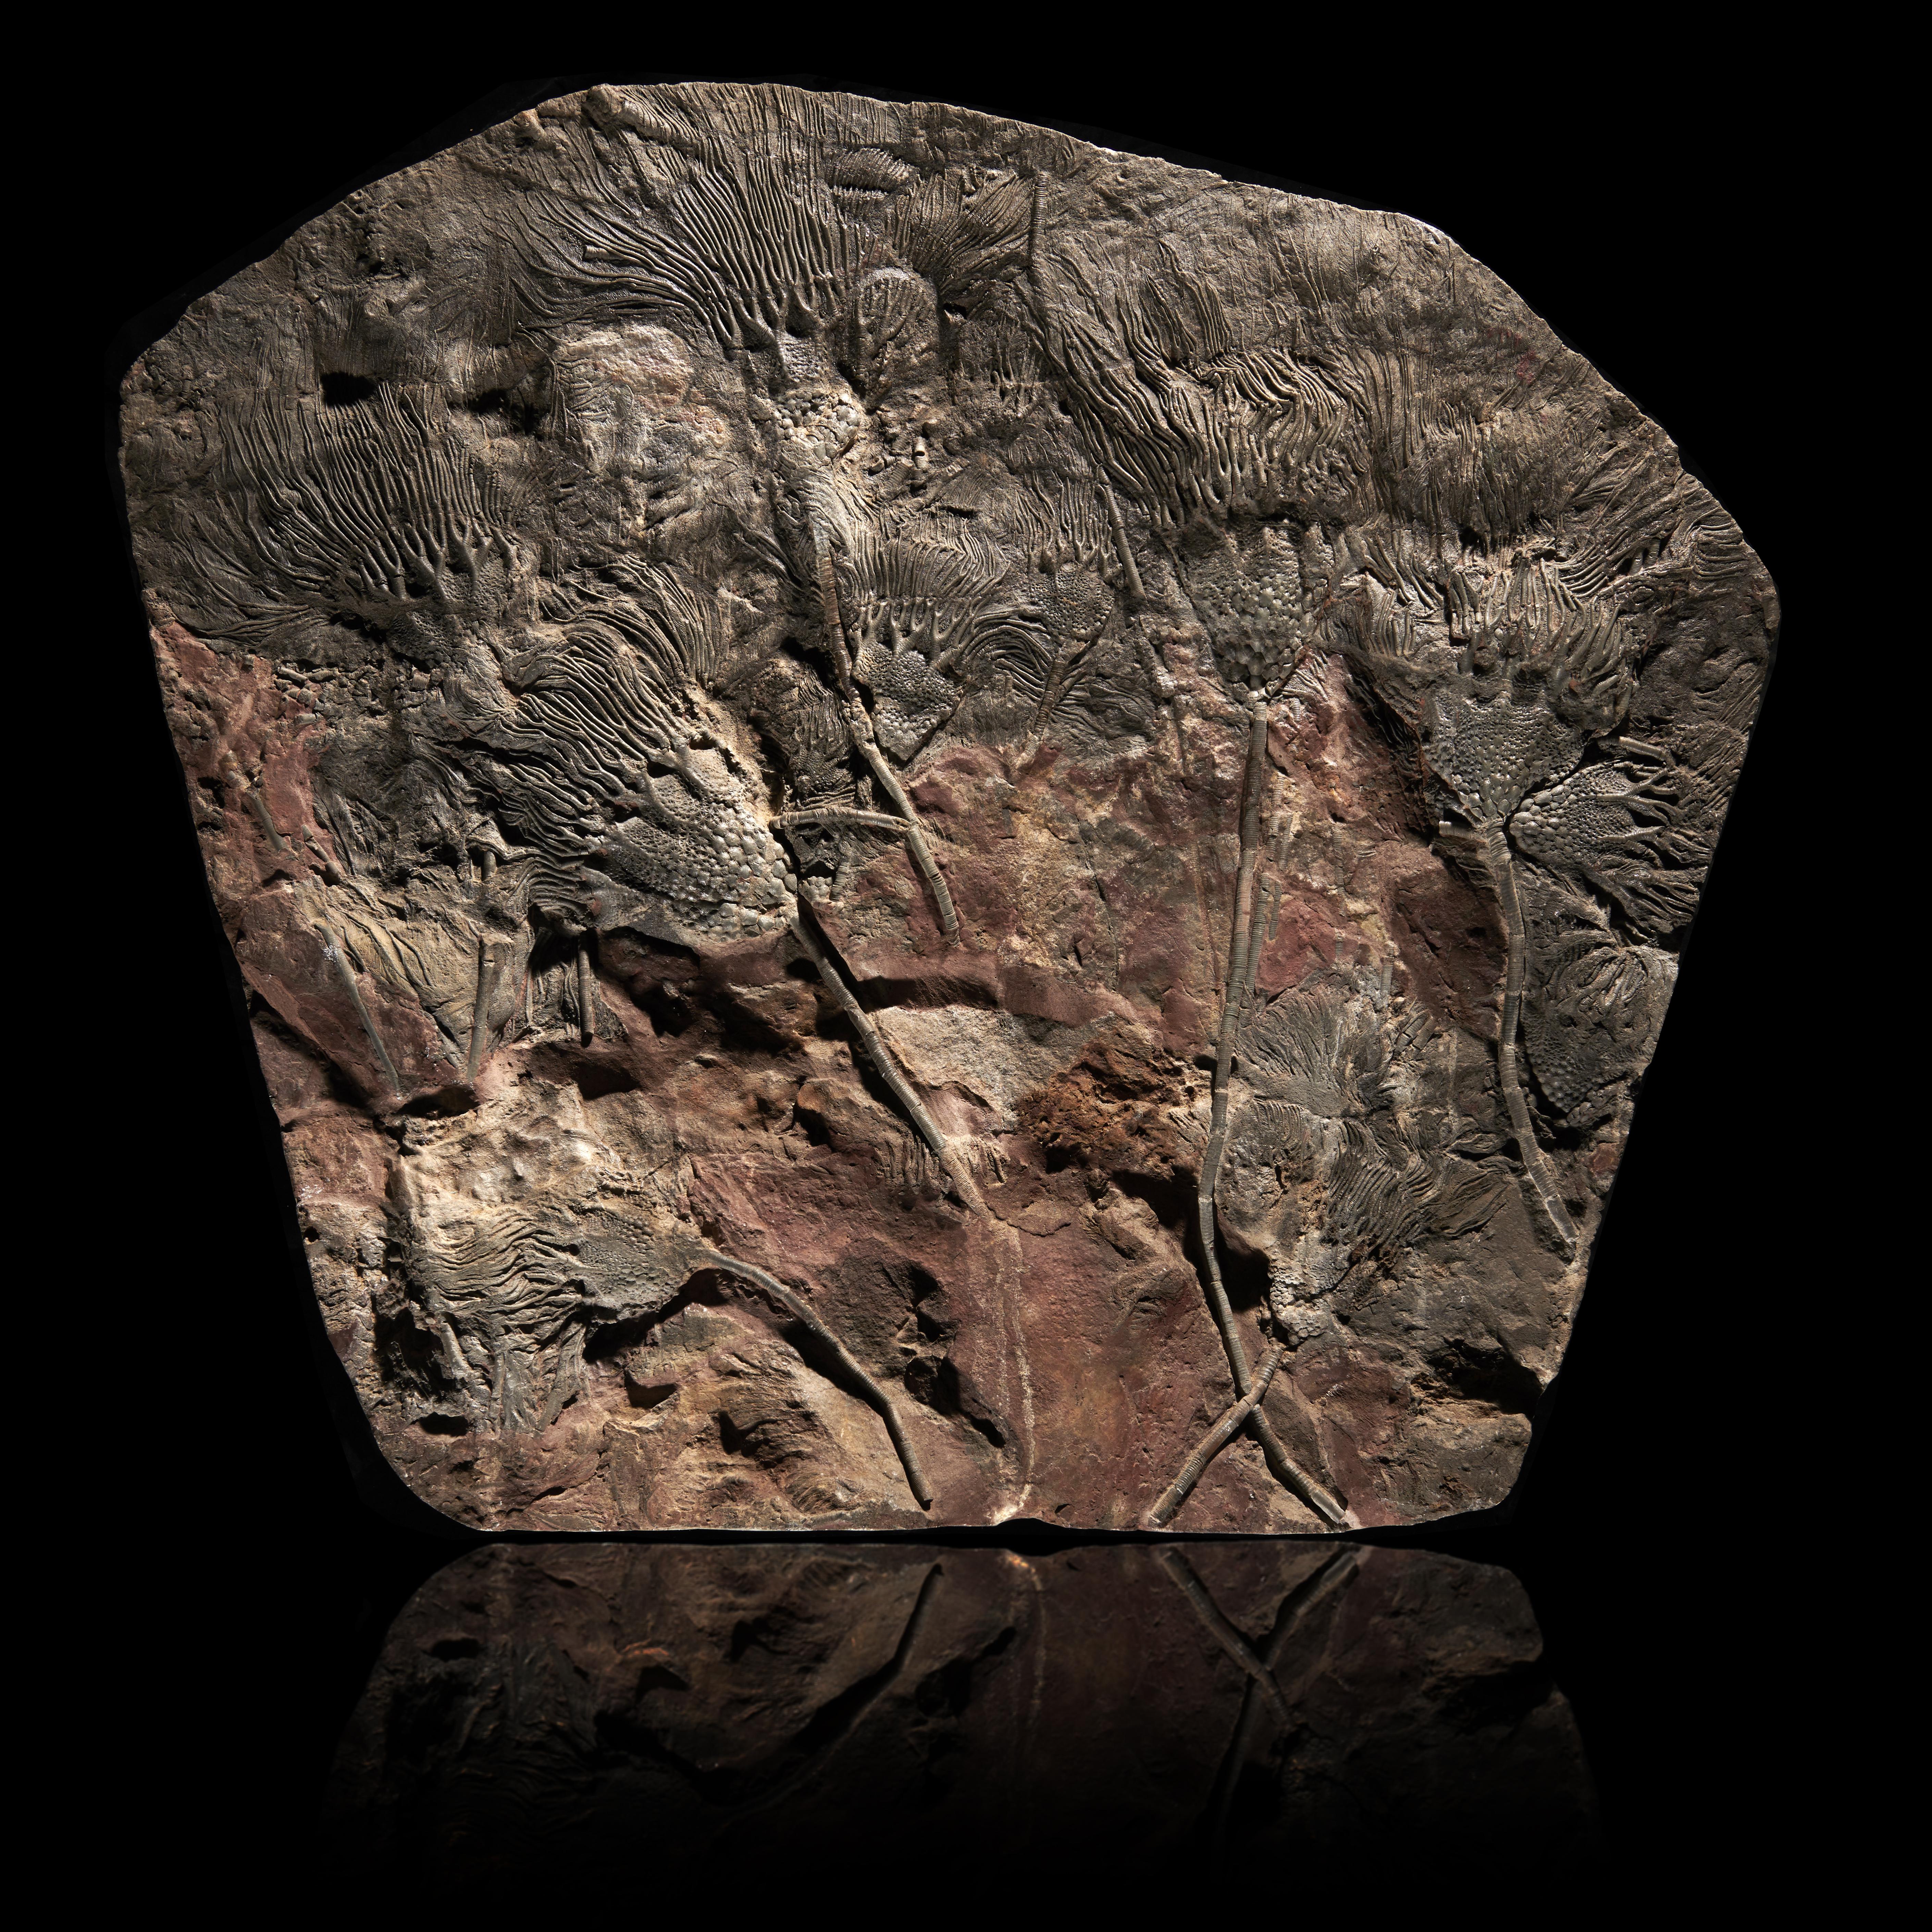 A fossil Crinoid plaque seyphocrinites spp. Morocco, Devonian 74cm by 81cm